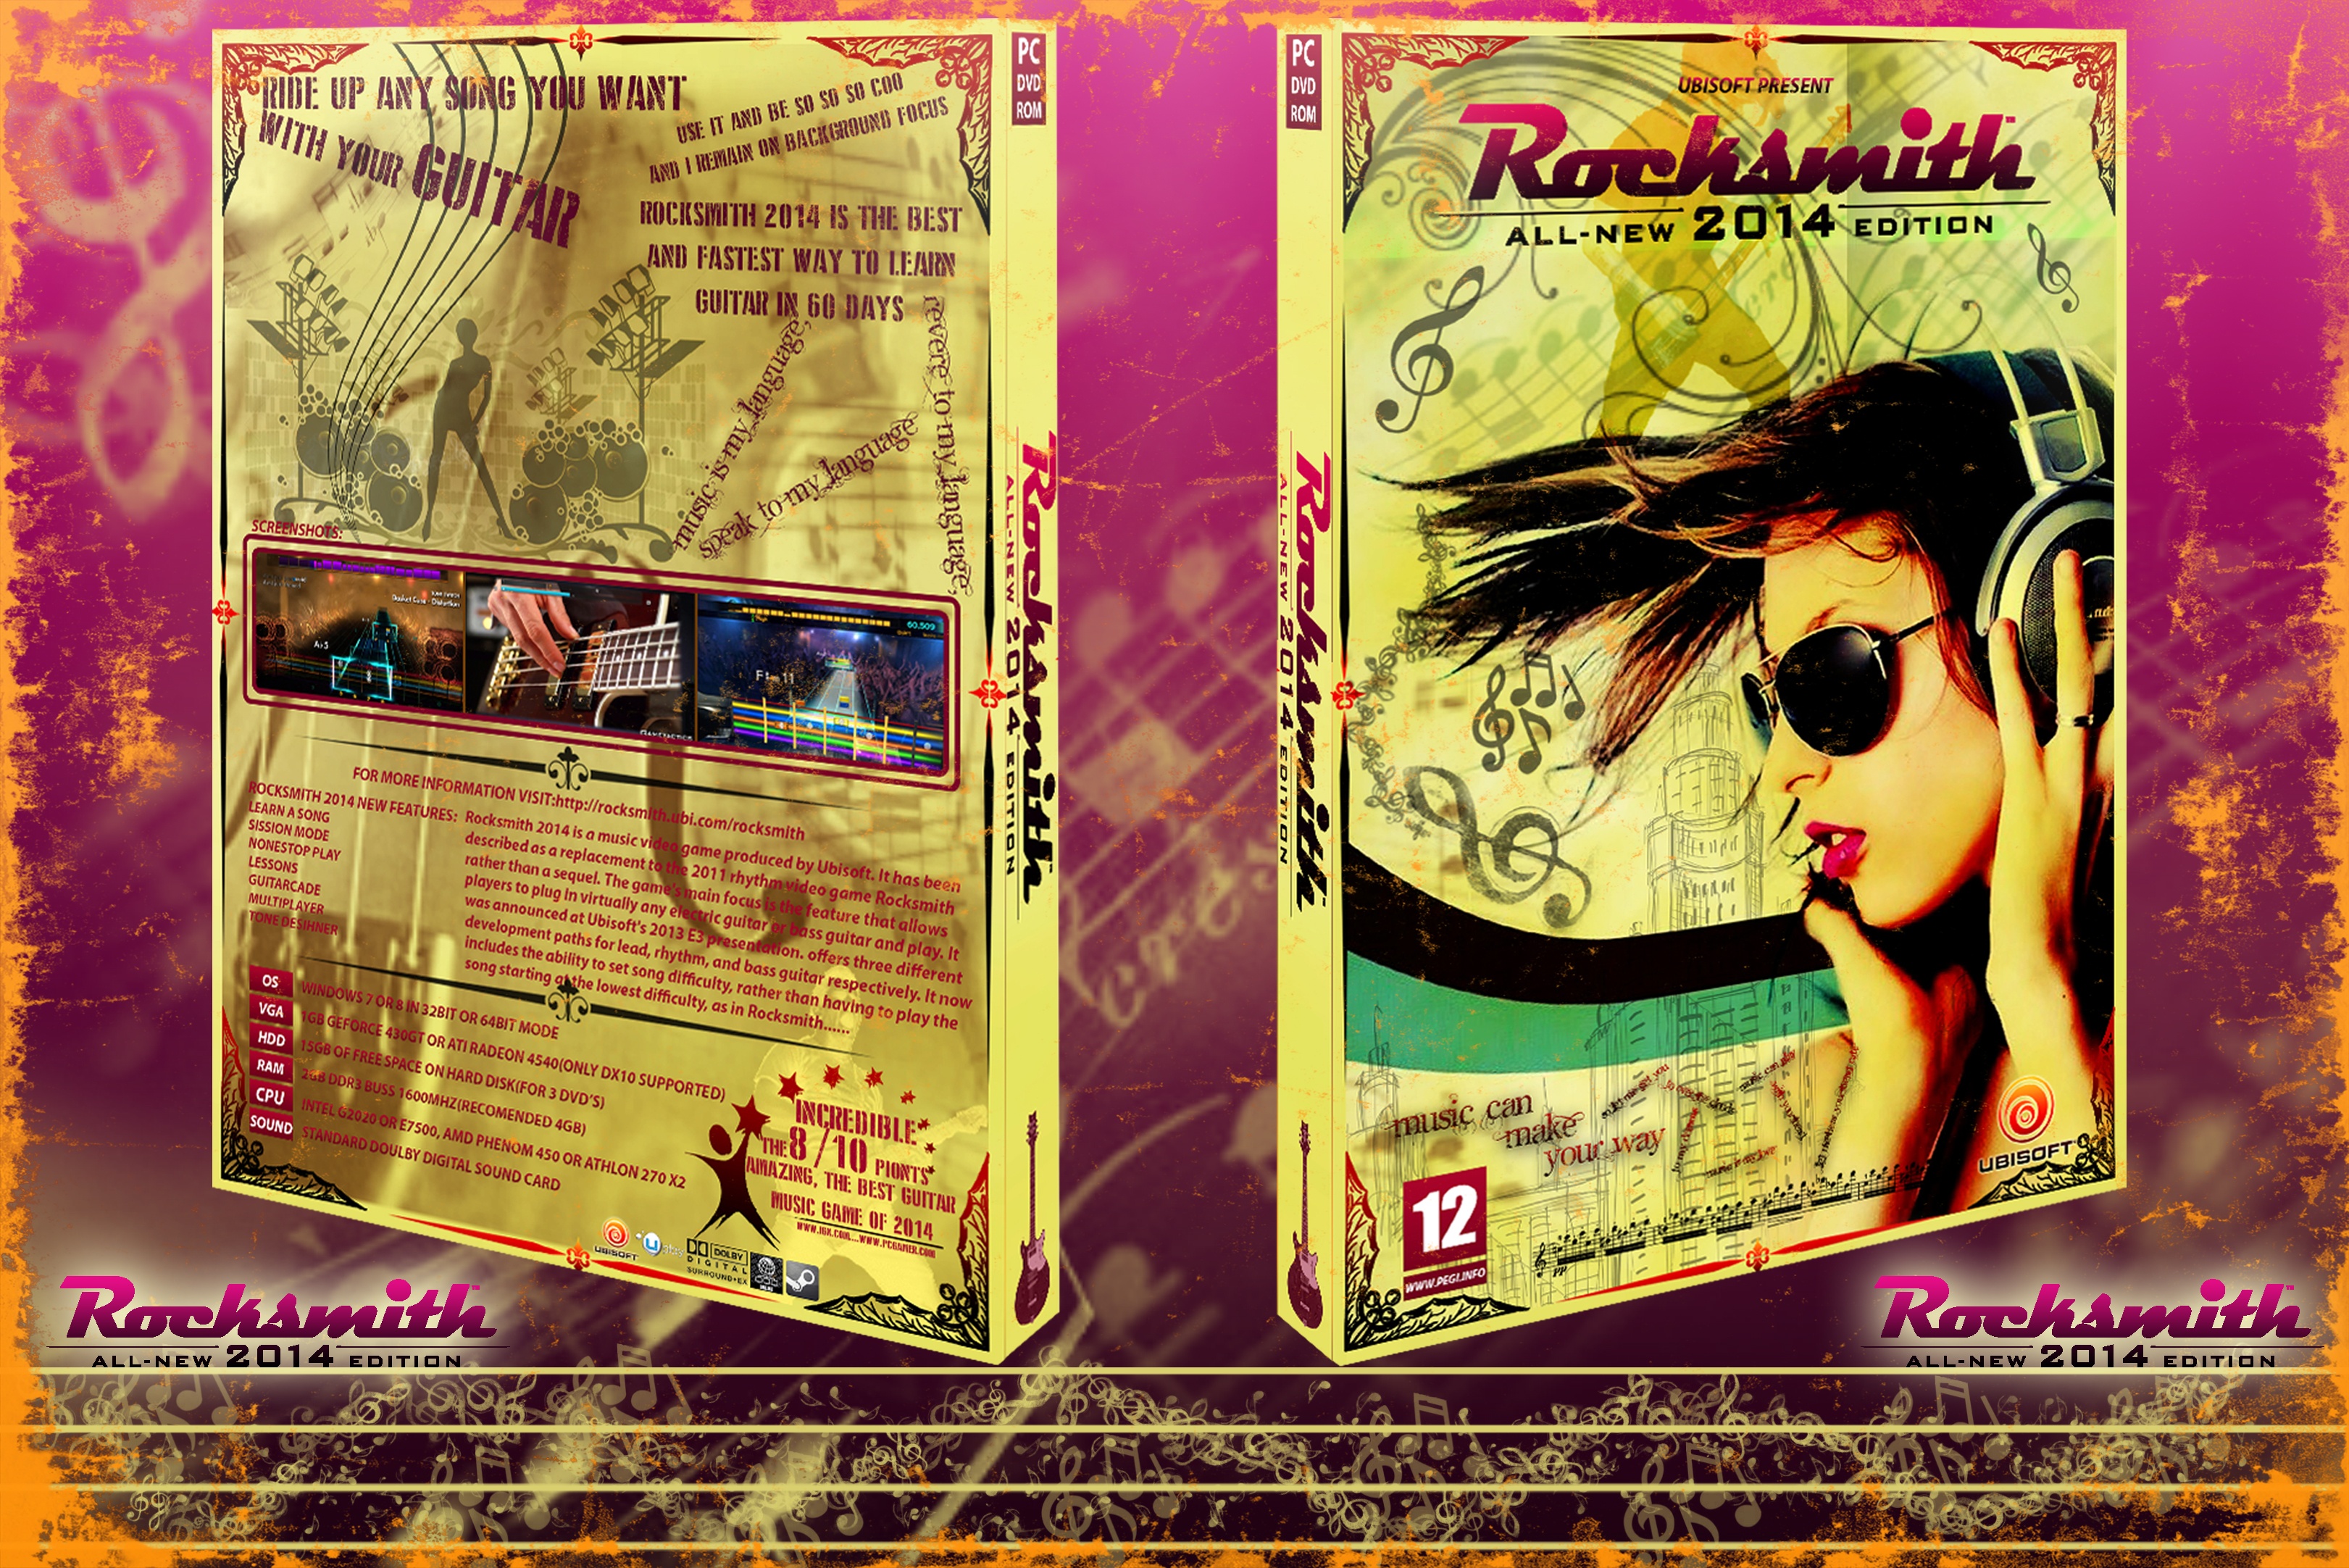 Rocksmith 2014 Edition box cover